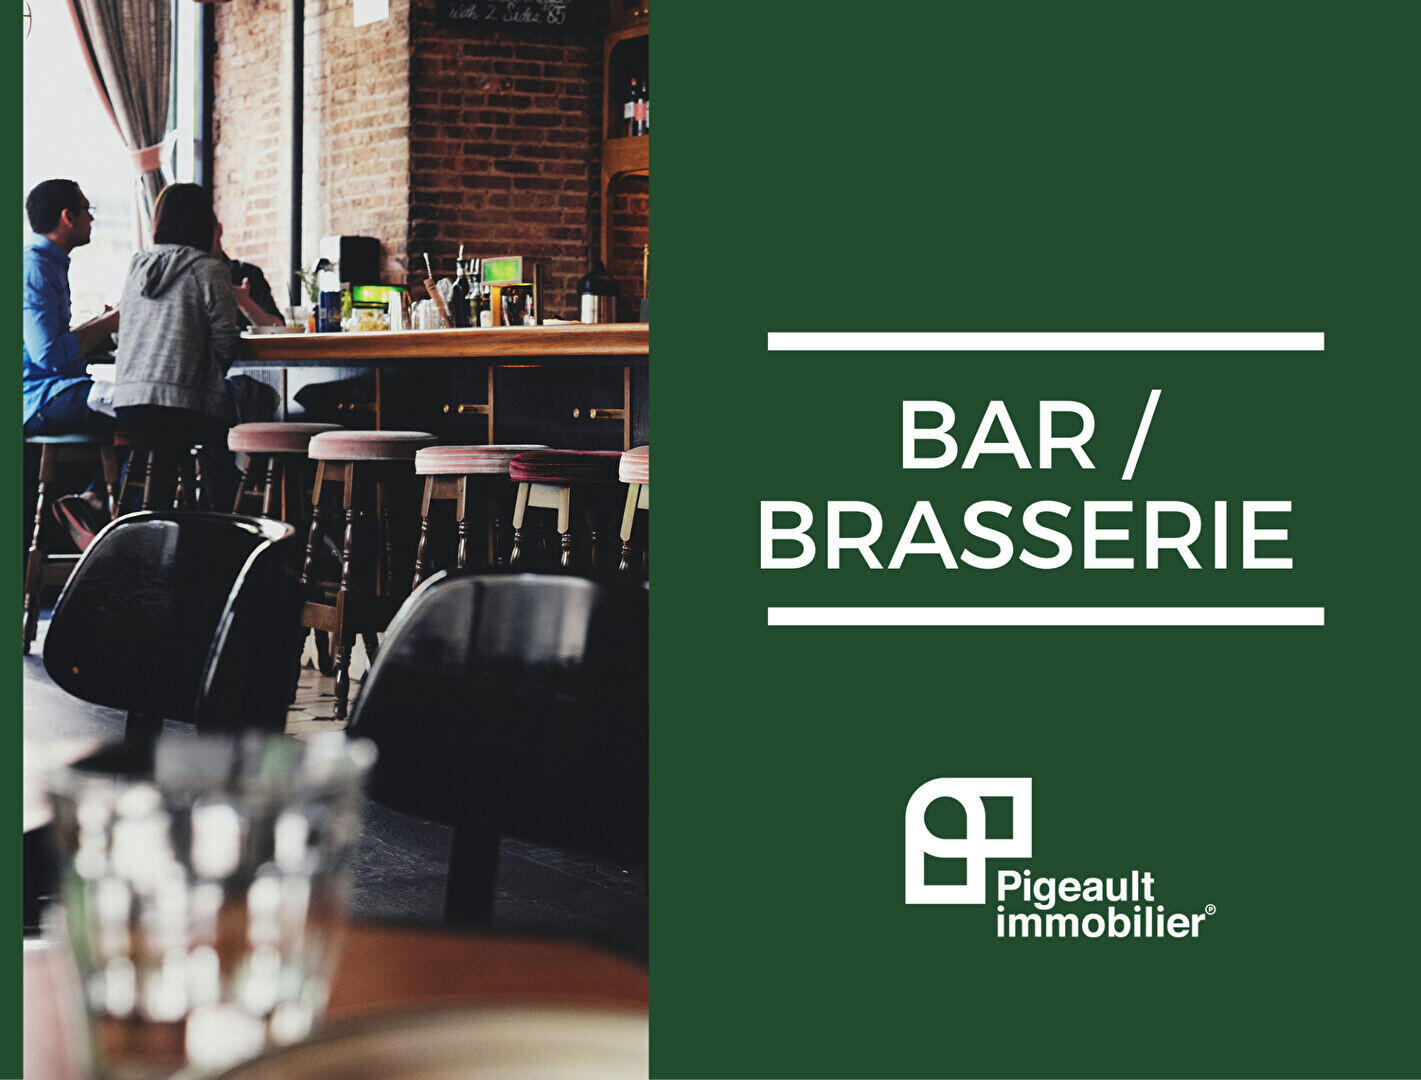 Vente restaurant bar brasserie terrasse à Rennes